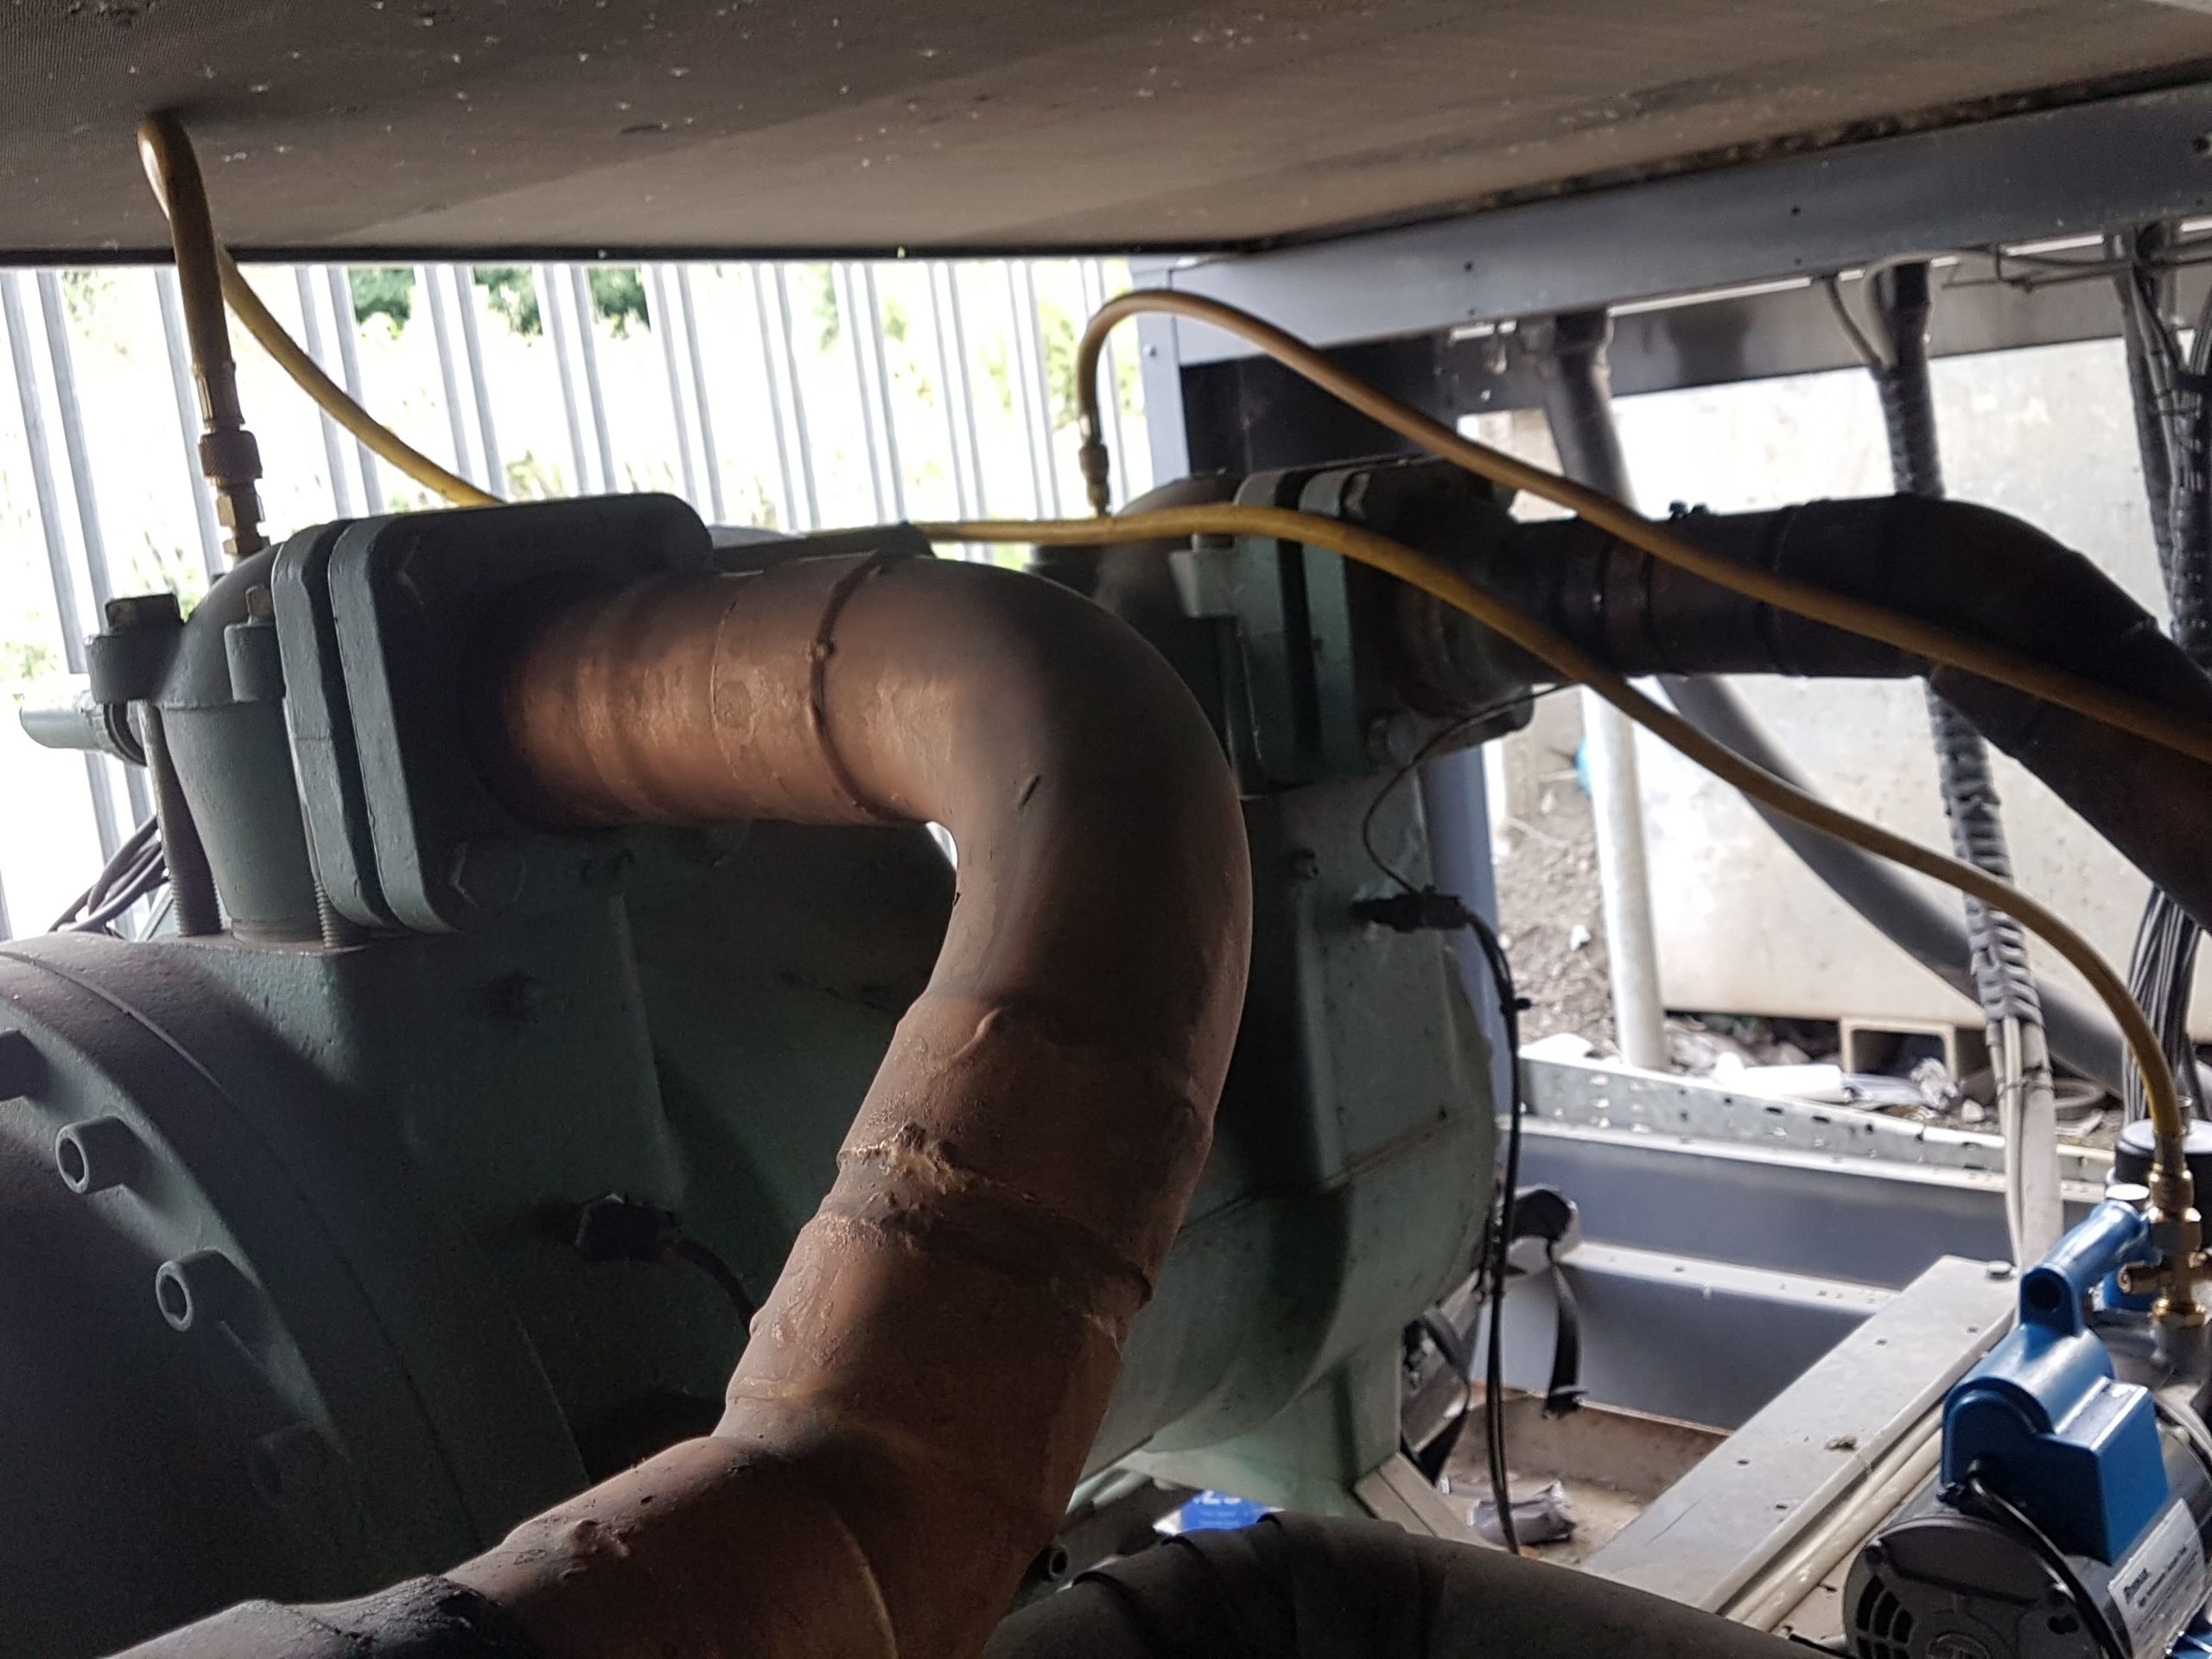 Green Bitzer compressor being vacuumed during HFC chiller service